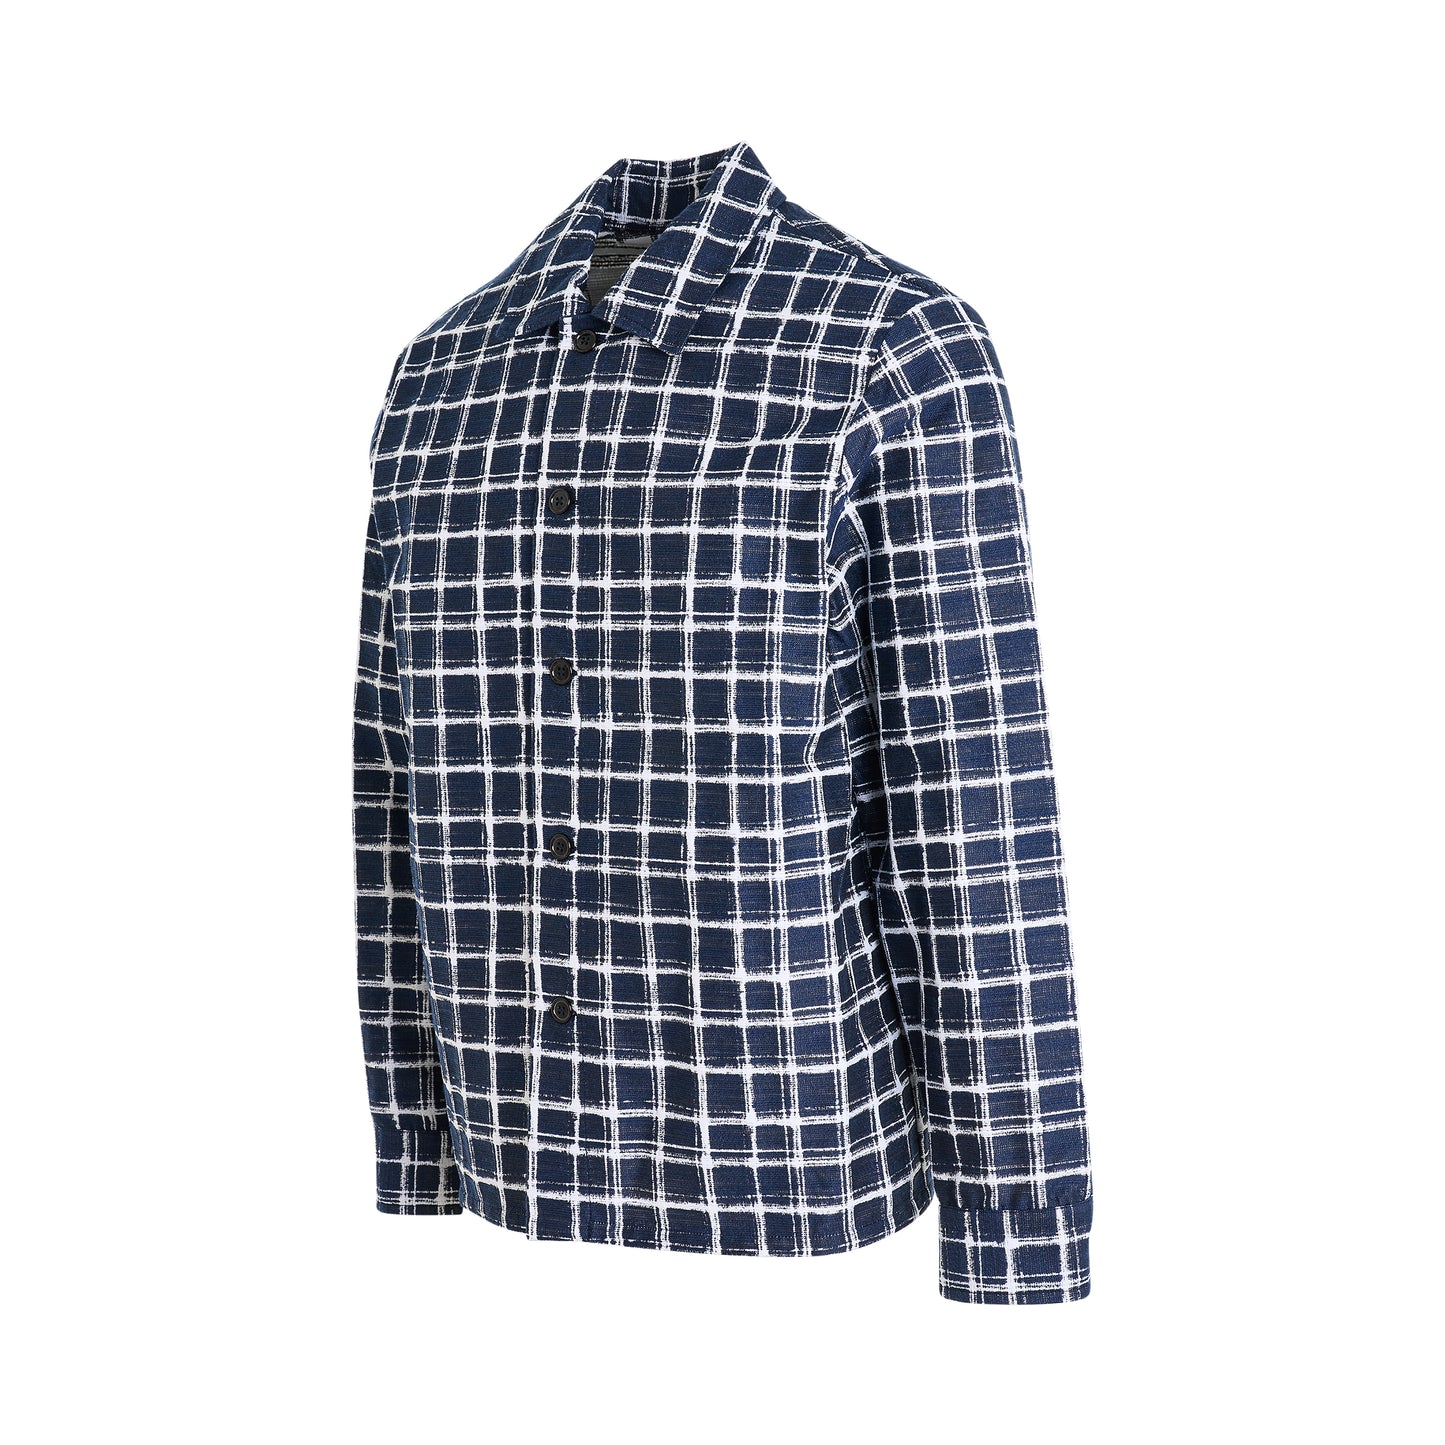 Kenzo Check Jacquard Overshirt in Midnight Blue